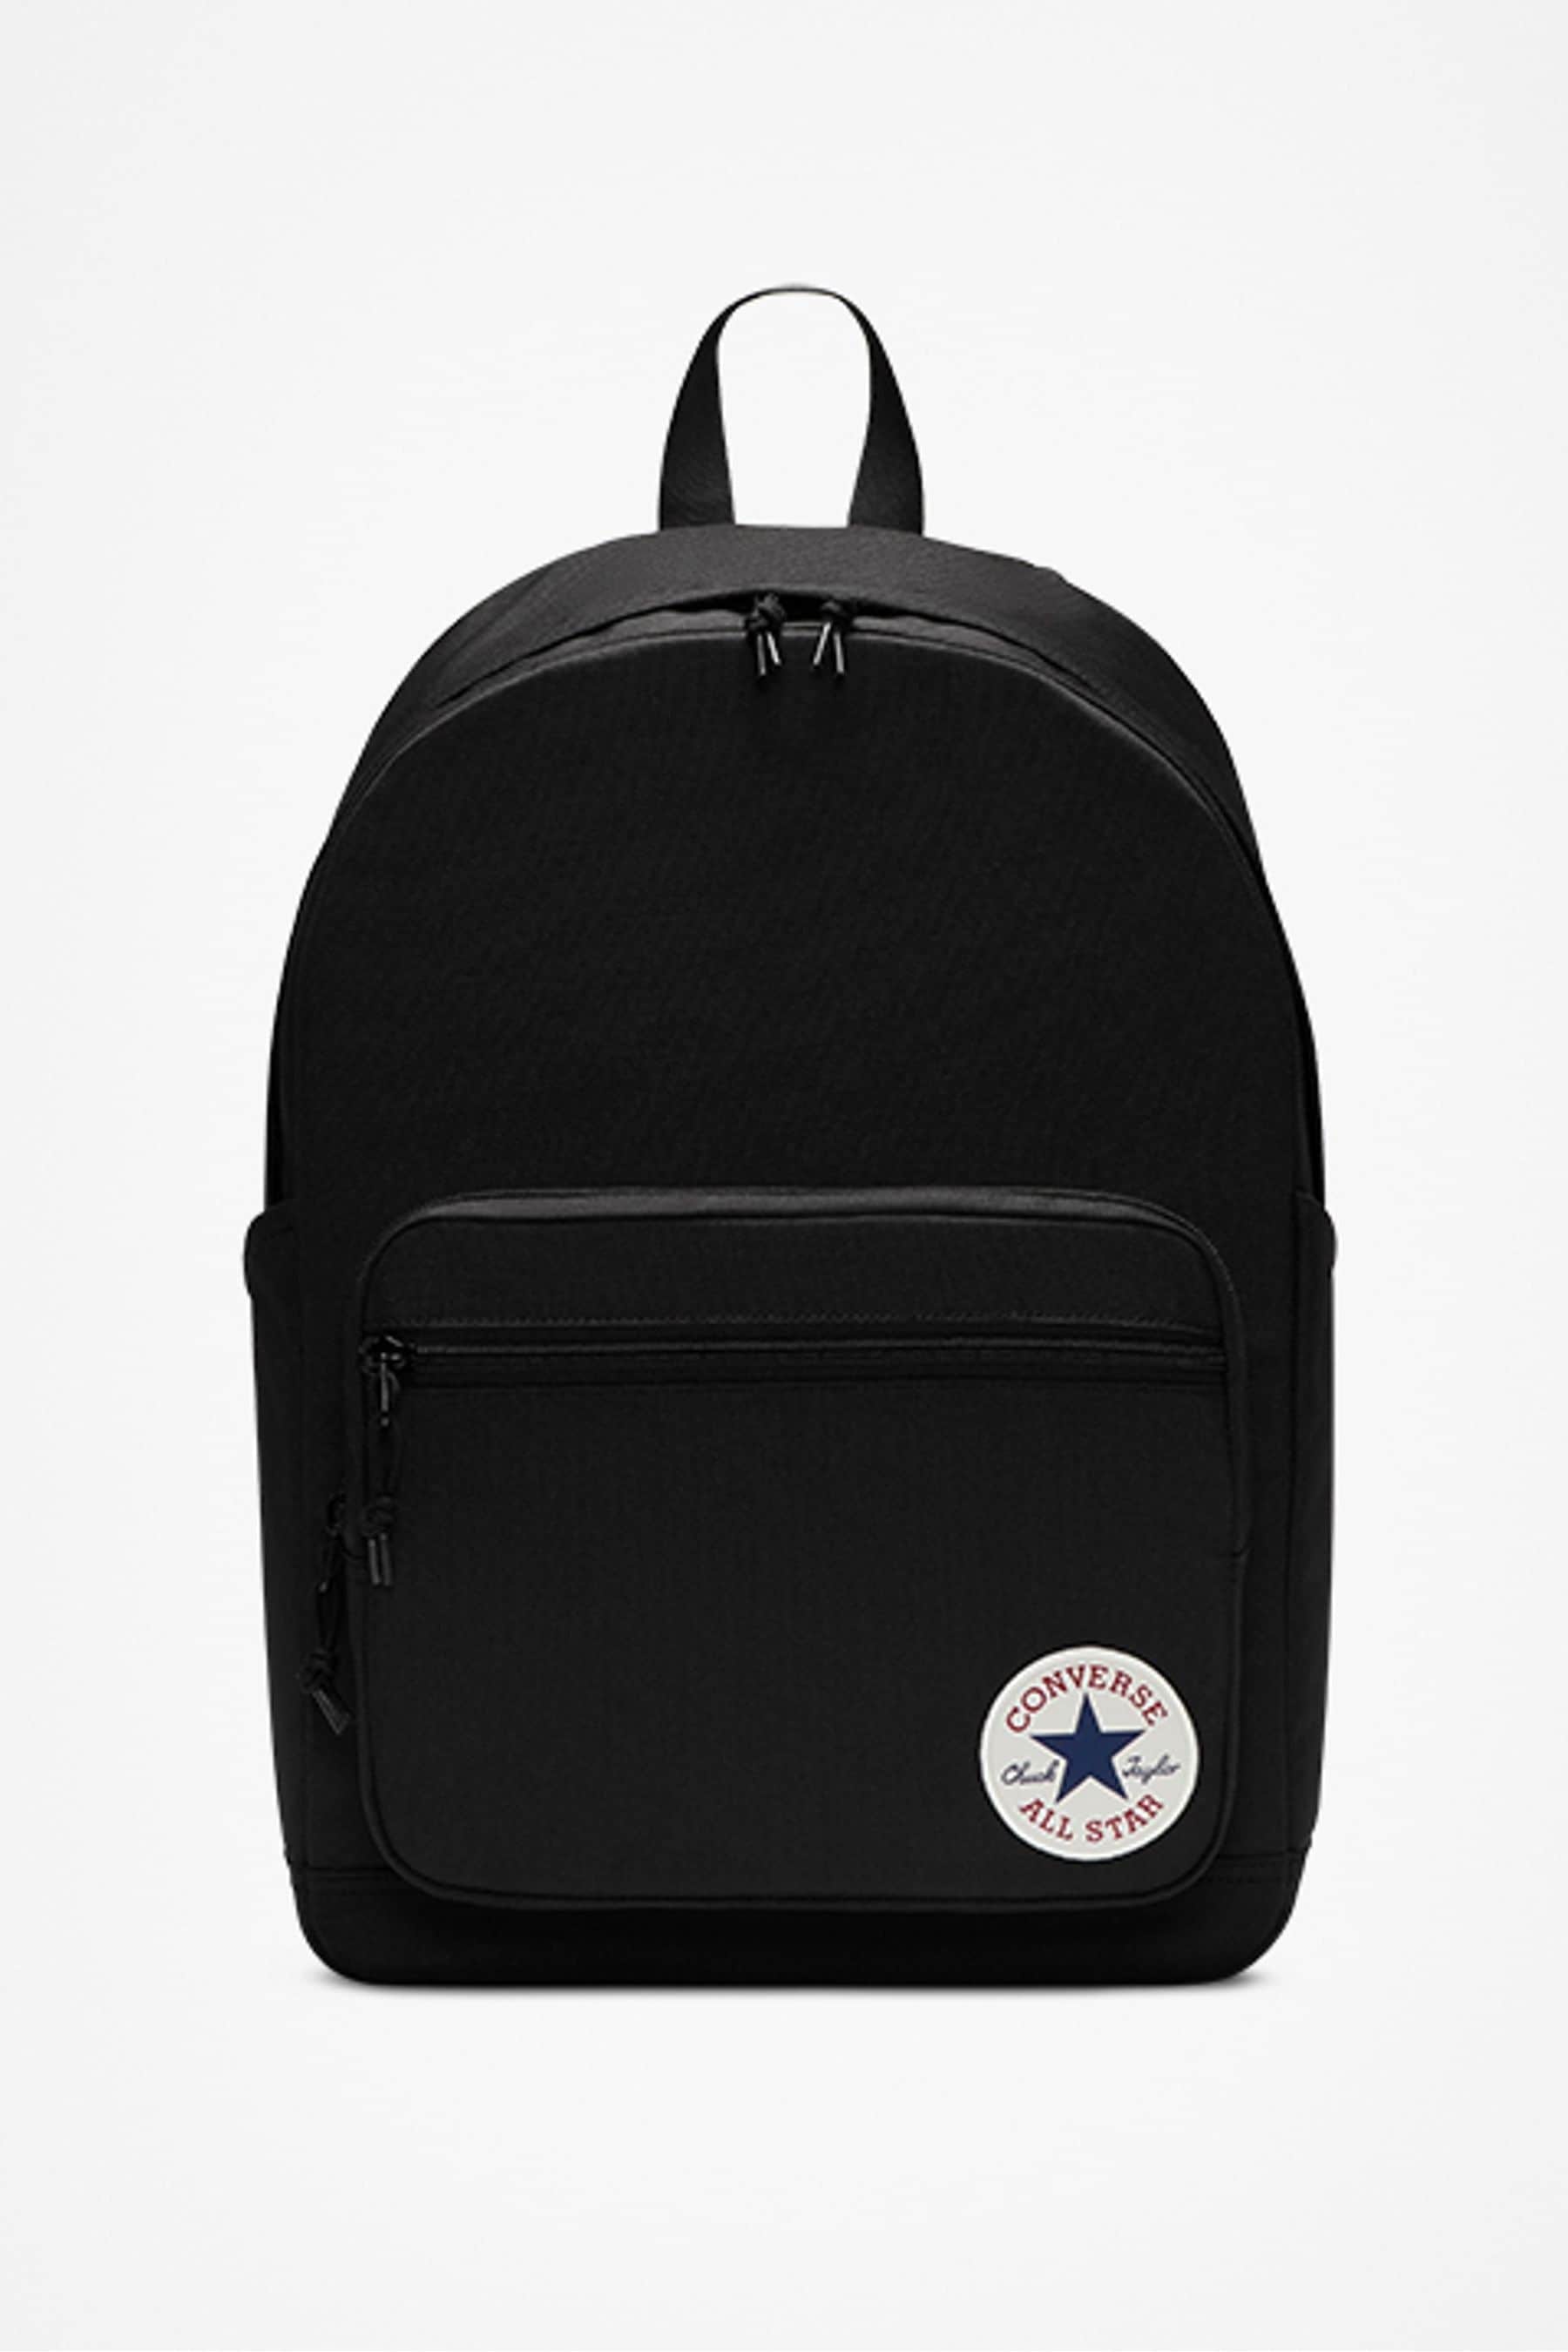 Converse All Star Chuck Taylor Strait Men Backpack Book Gym School Bag  10007784 | eBay